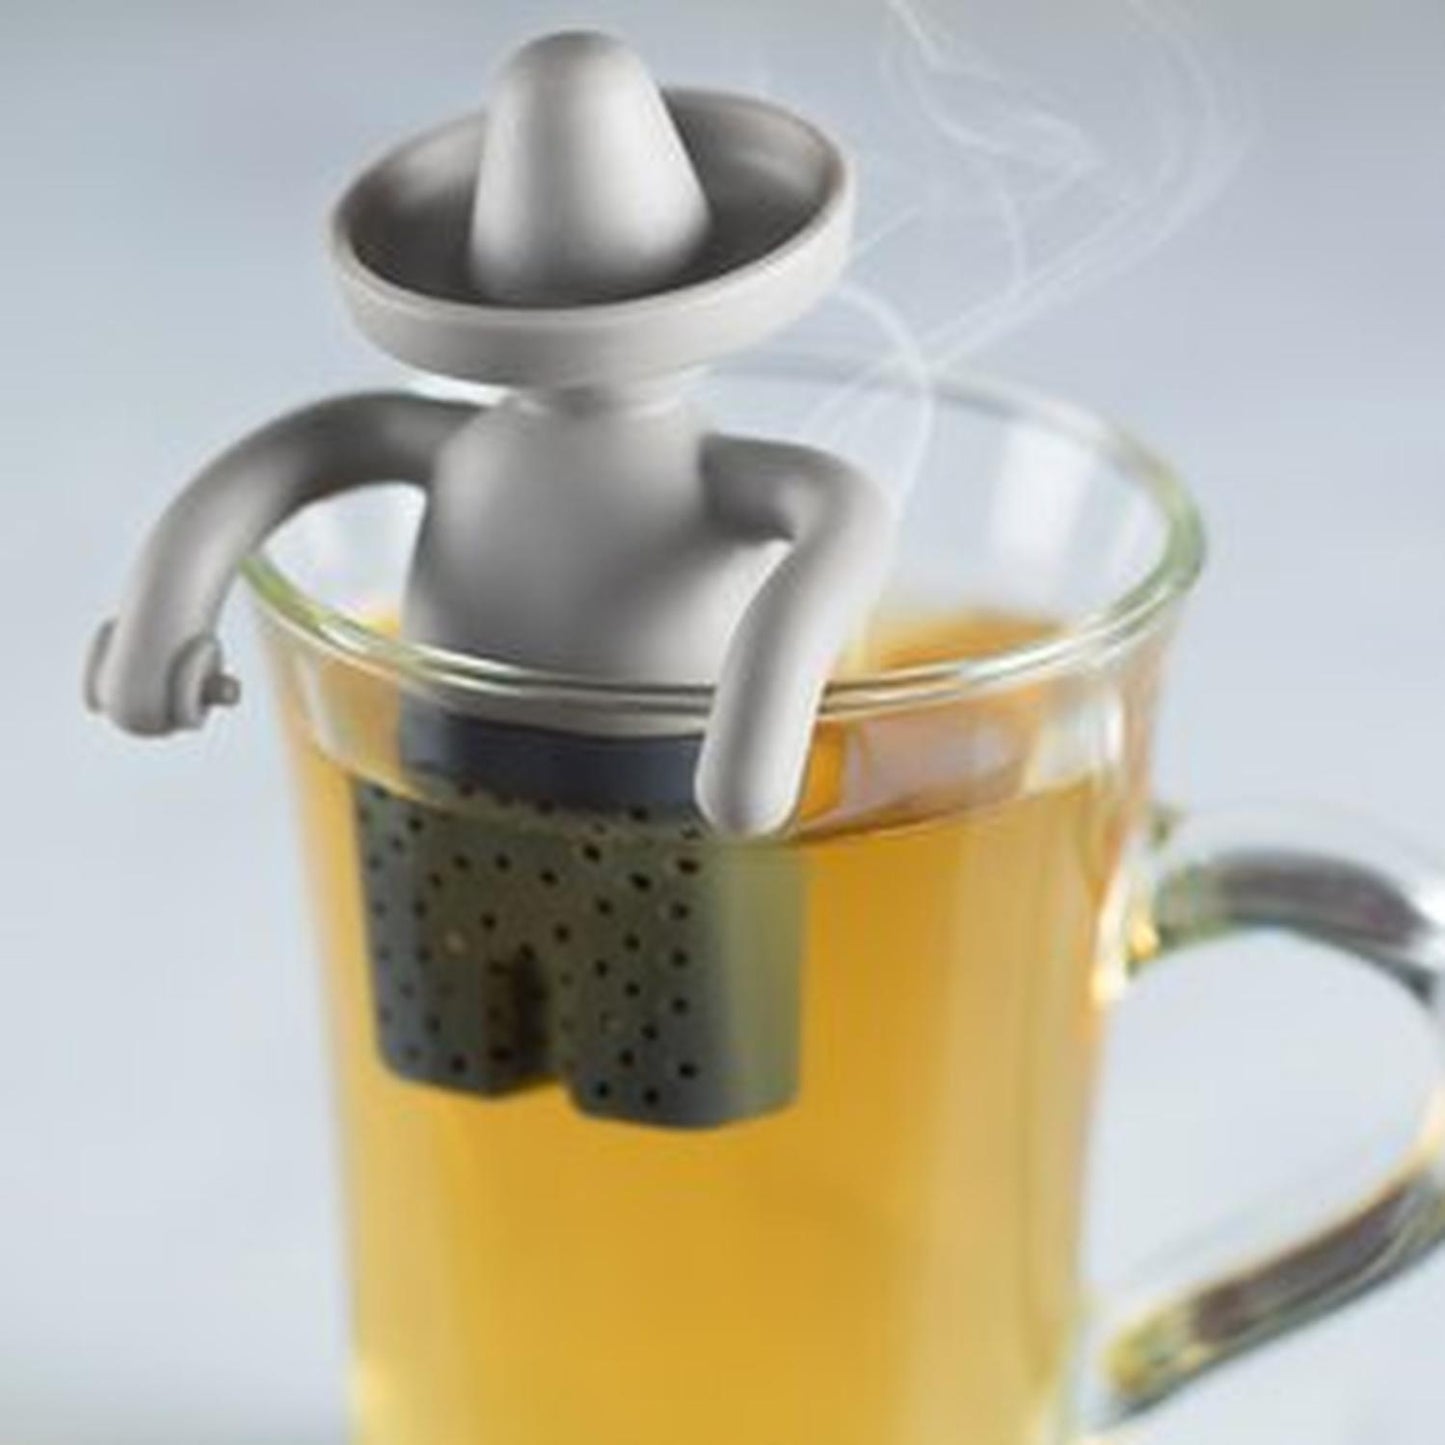 Imagine-Nation "Borracho-te" Infusor de té